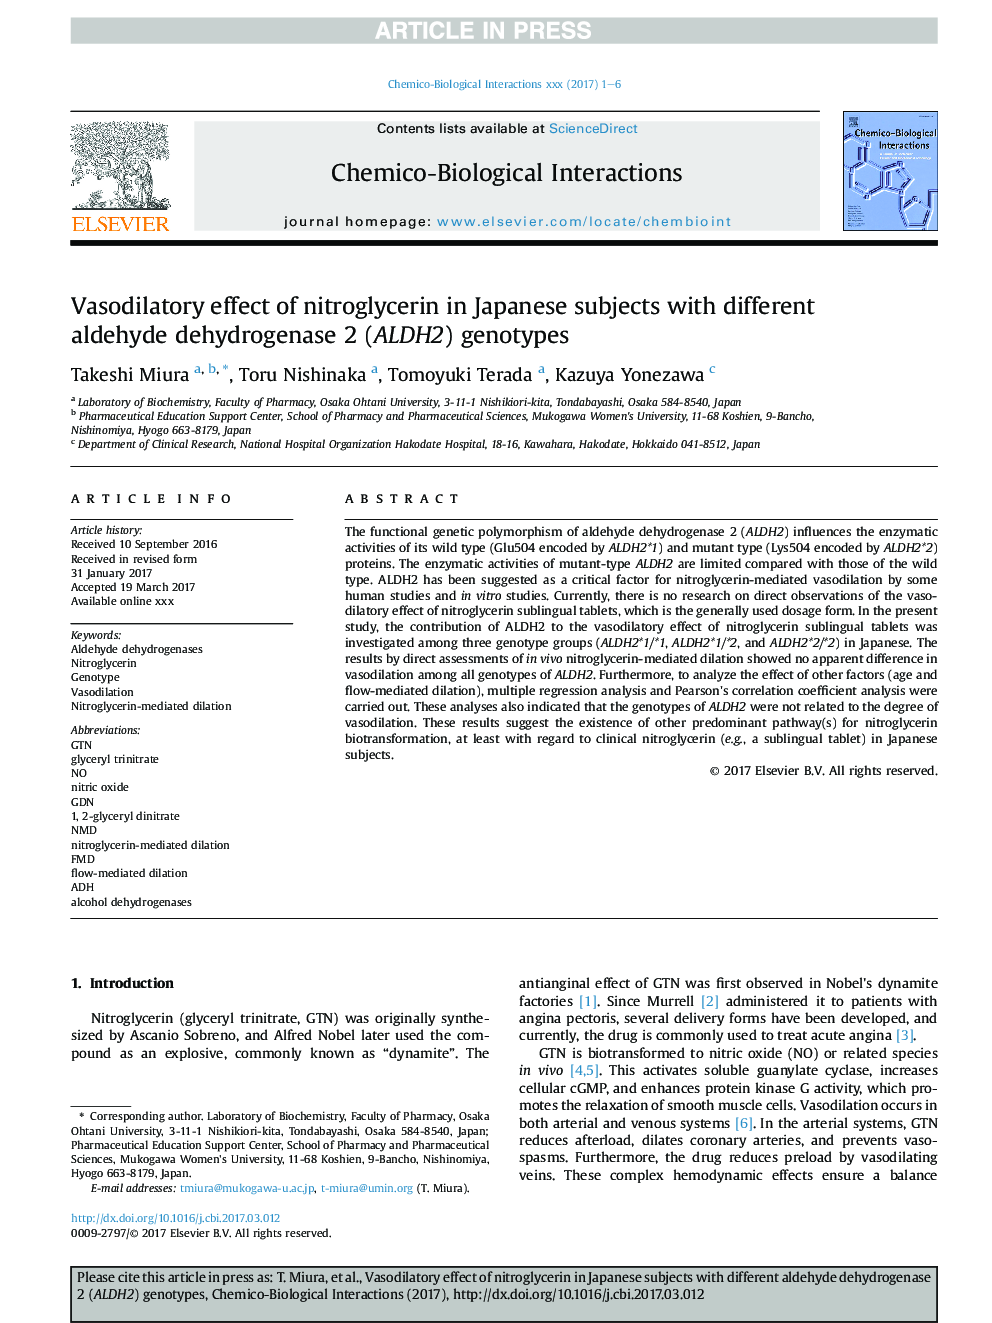 Vasodilatory effect of nitroglycerin in Japanese subjects with different aldehyde dehydrogenase 2 (ALDH2) genotypes